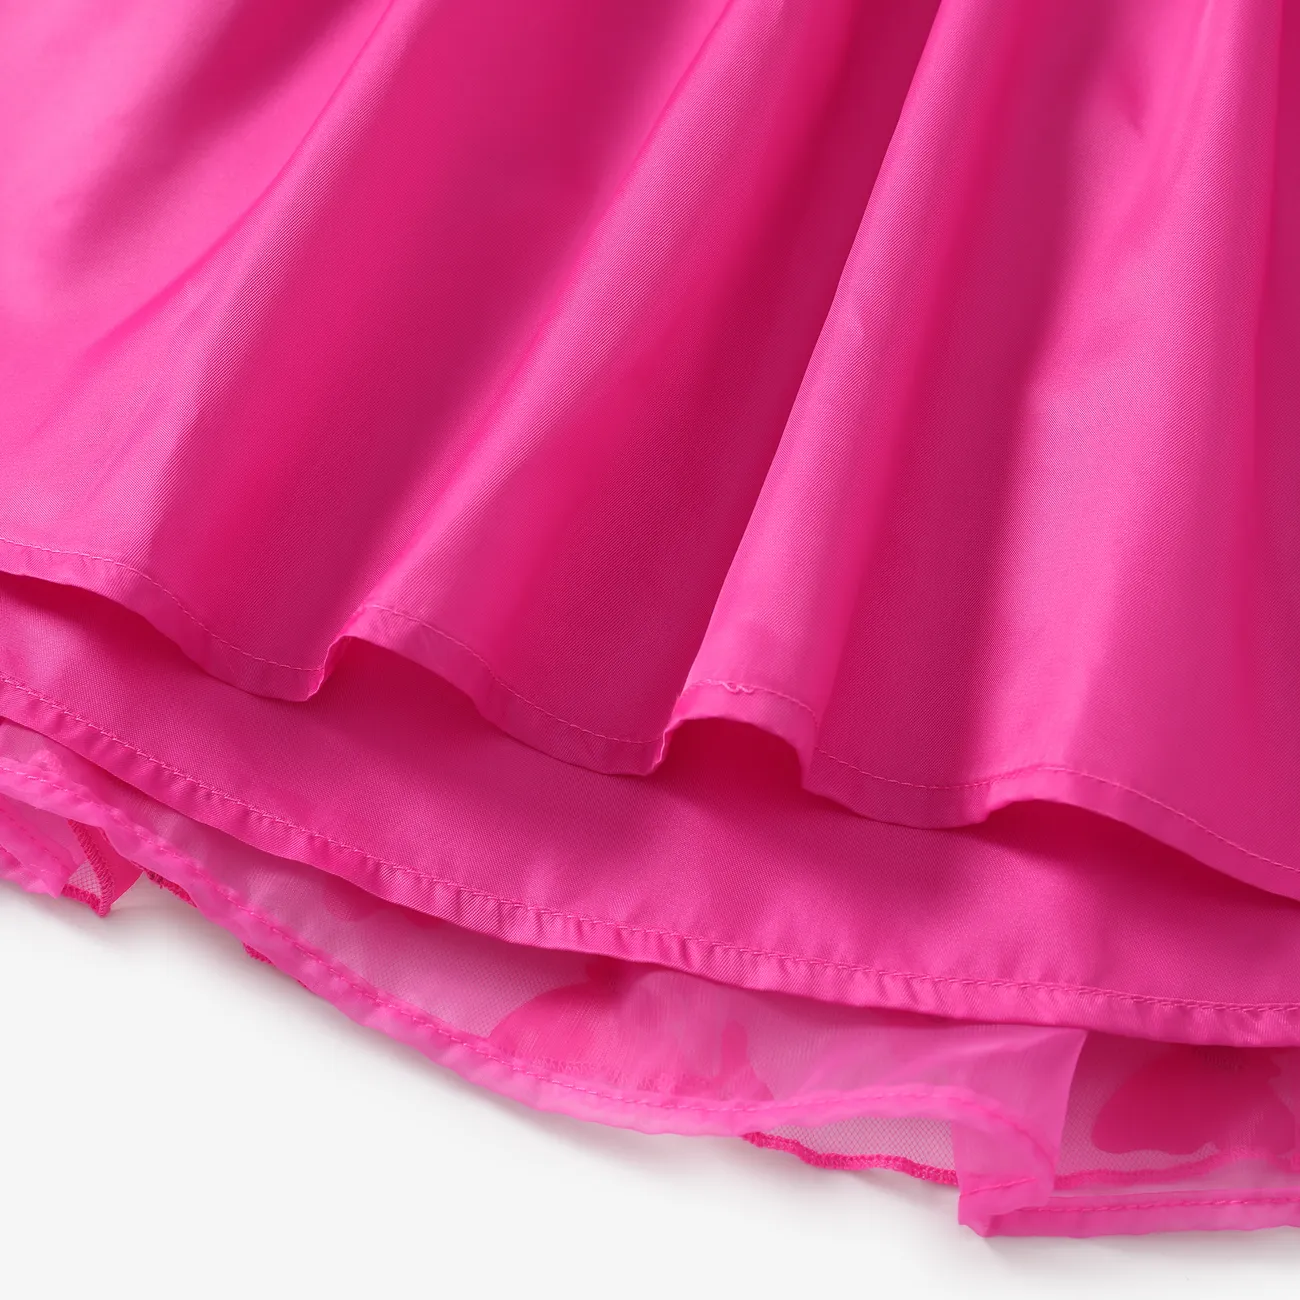 Barbie Toddler Girls 1pc 3D Butterfly Flutter-sleeve Mesh Multilayers Dress Roseo big image 1